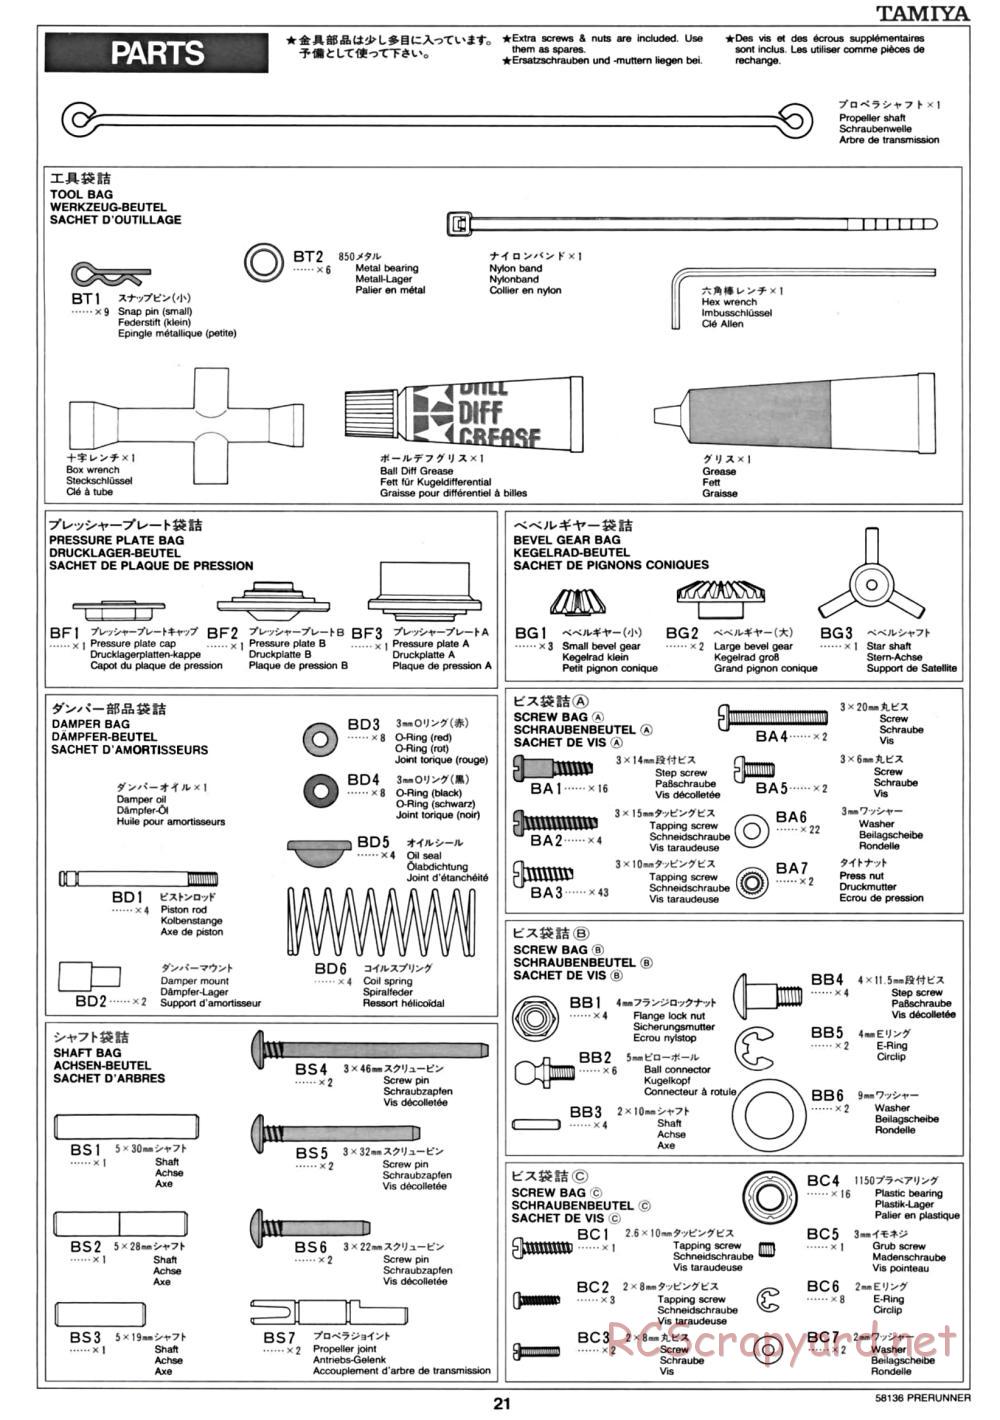 Tamiya - Toyota Prerunner Chassis - Manual - Page 21